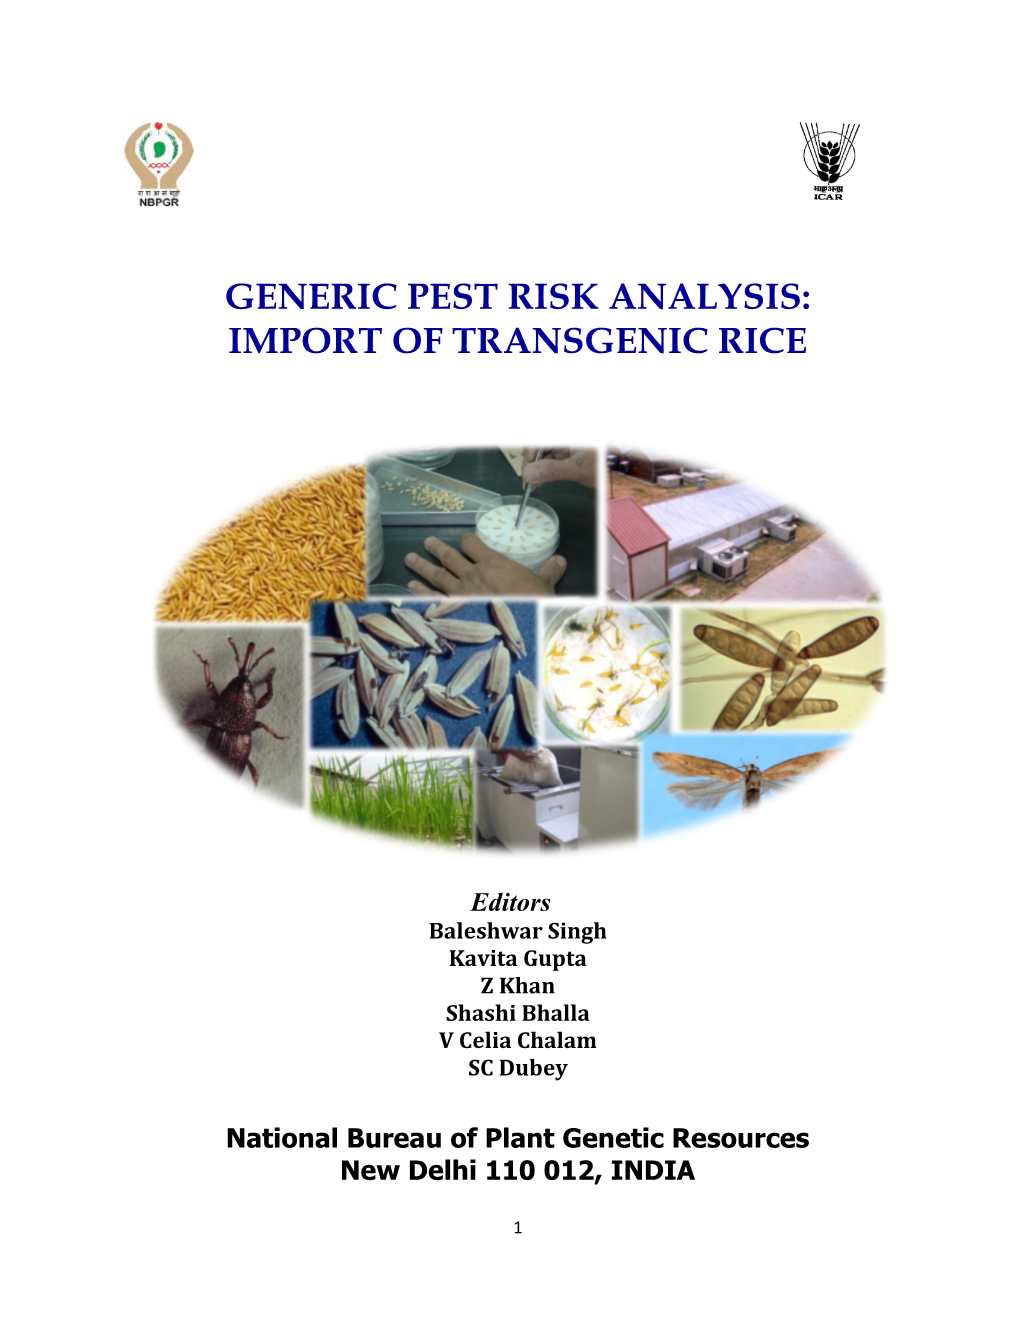 Generic Pest Risk Analysis: Import of Transgenic Rice